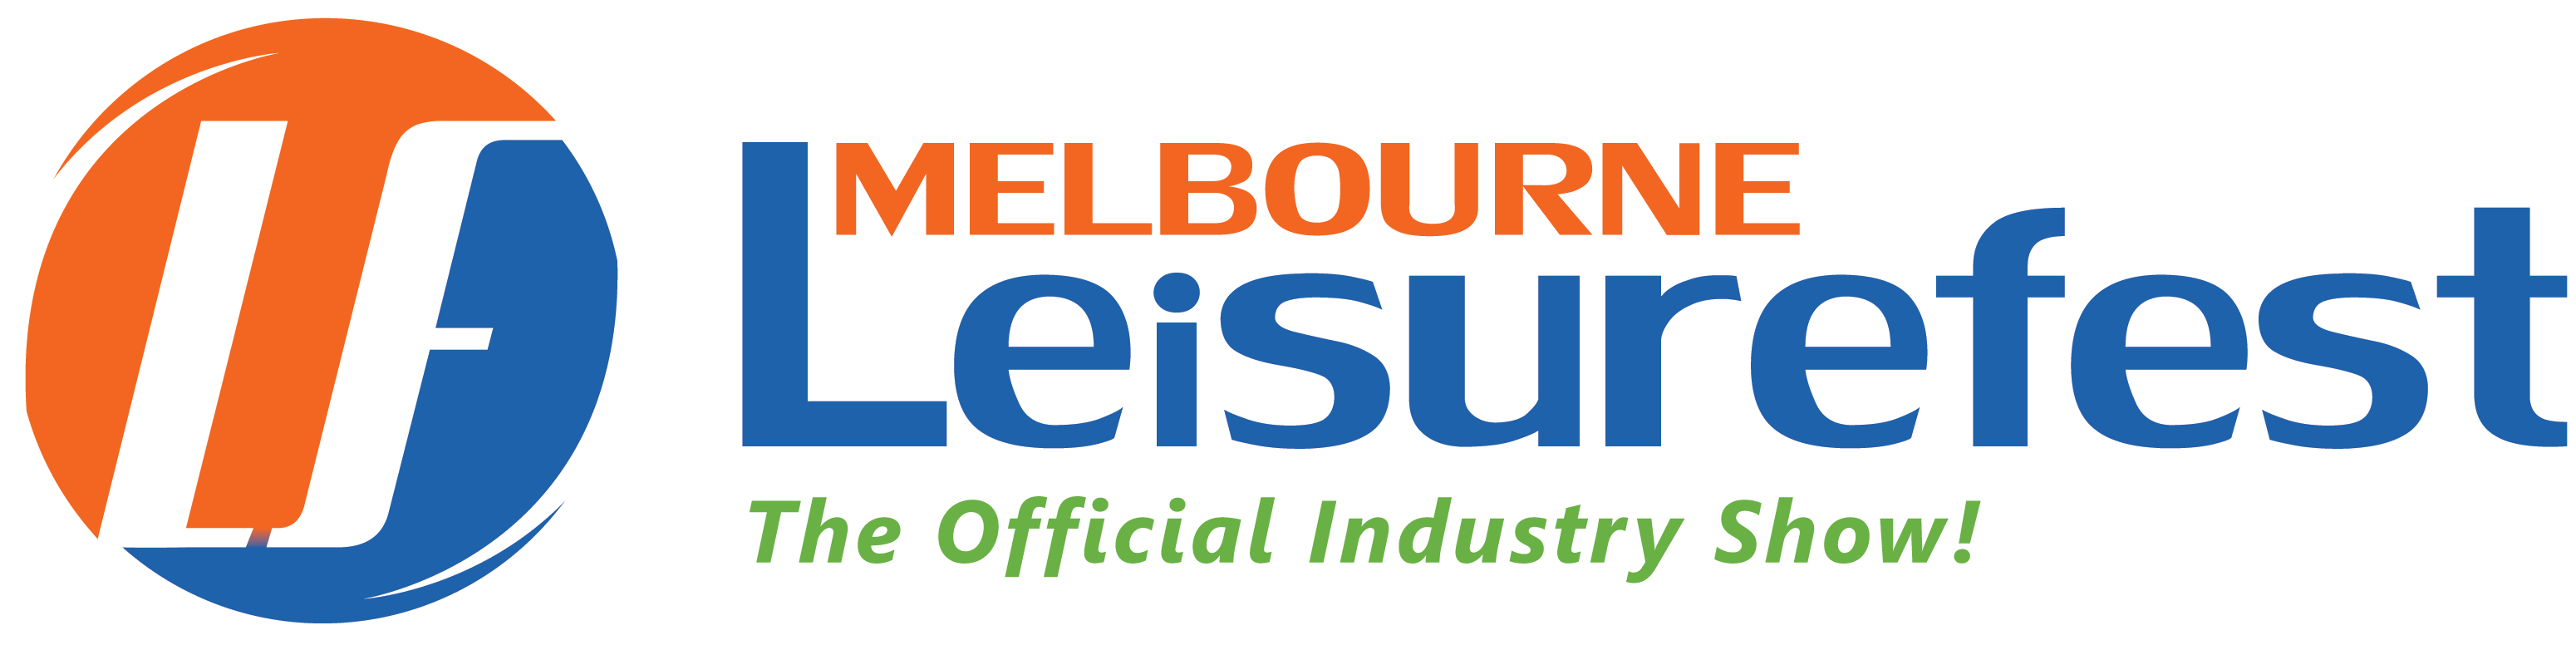 Melbourne Leisurefest